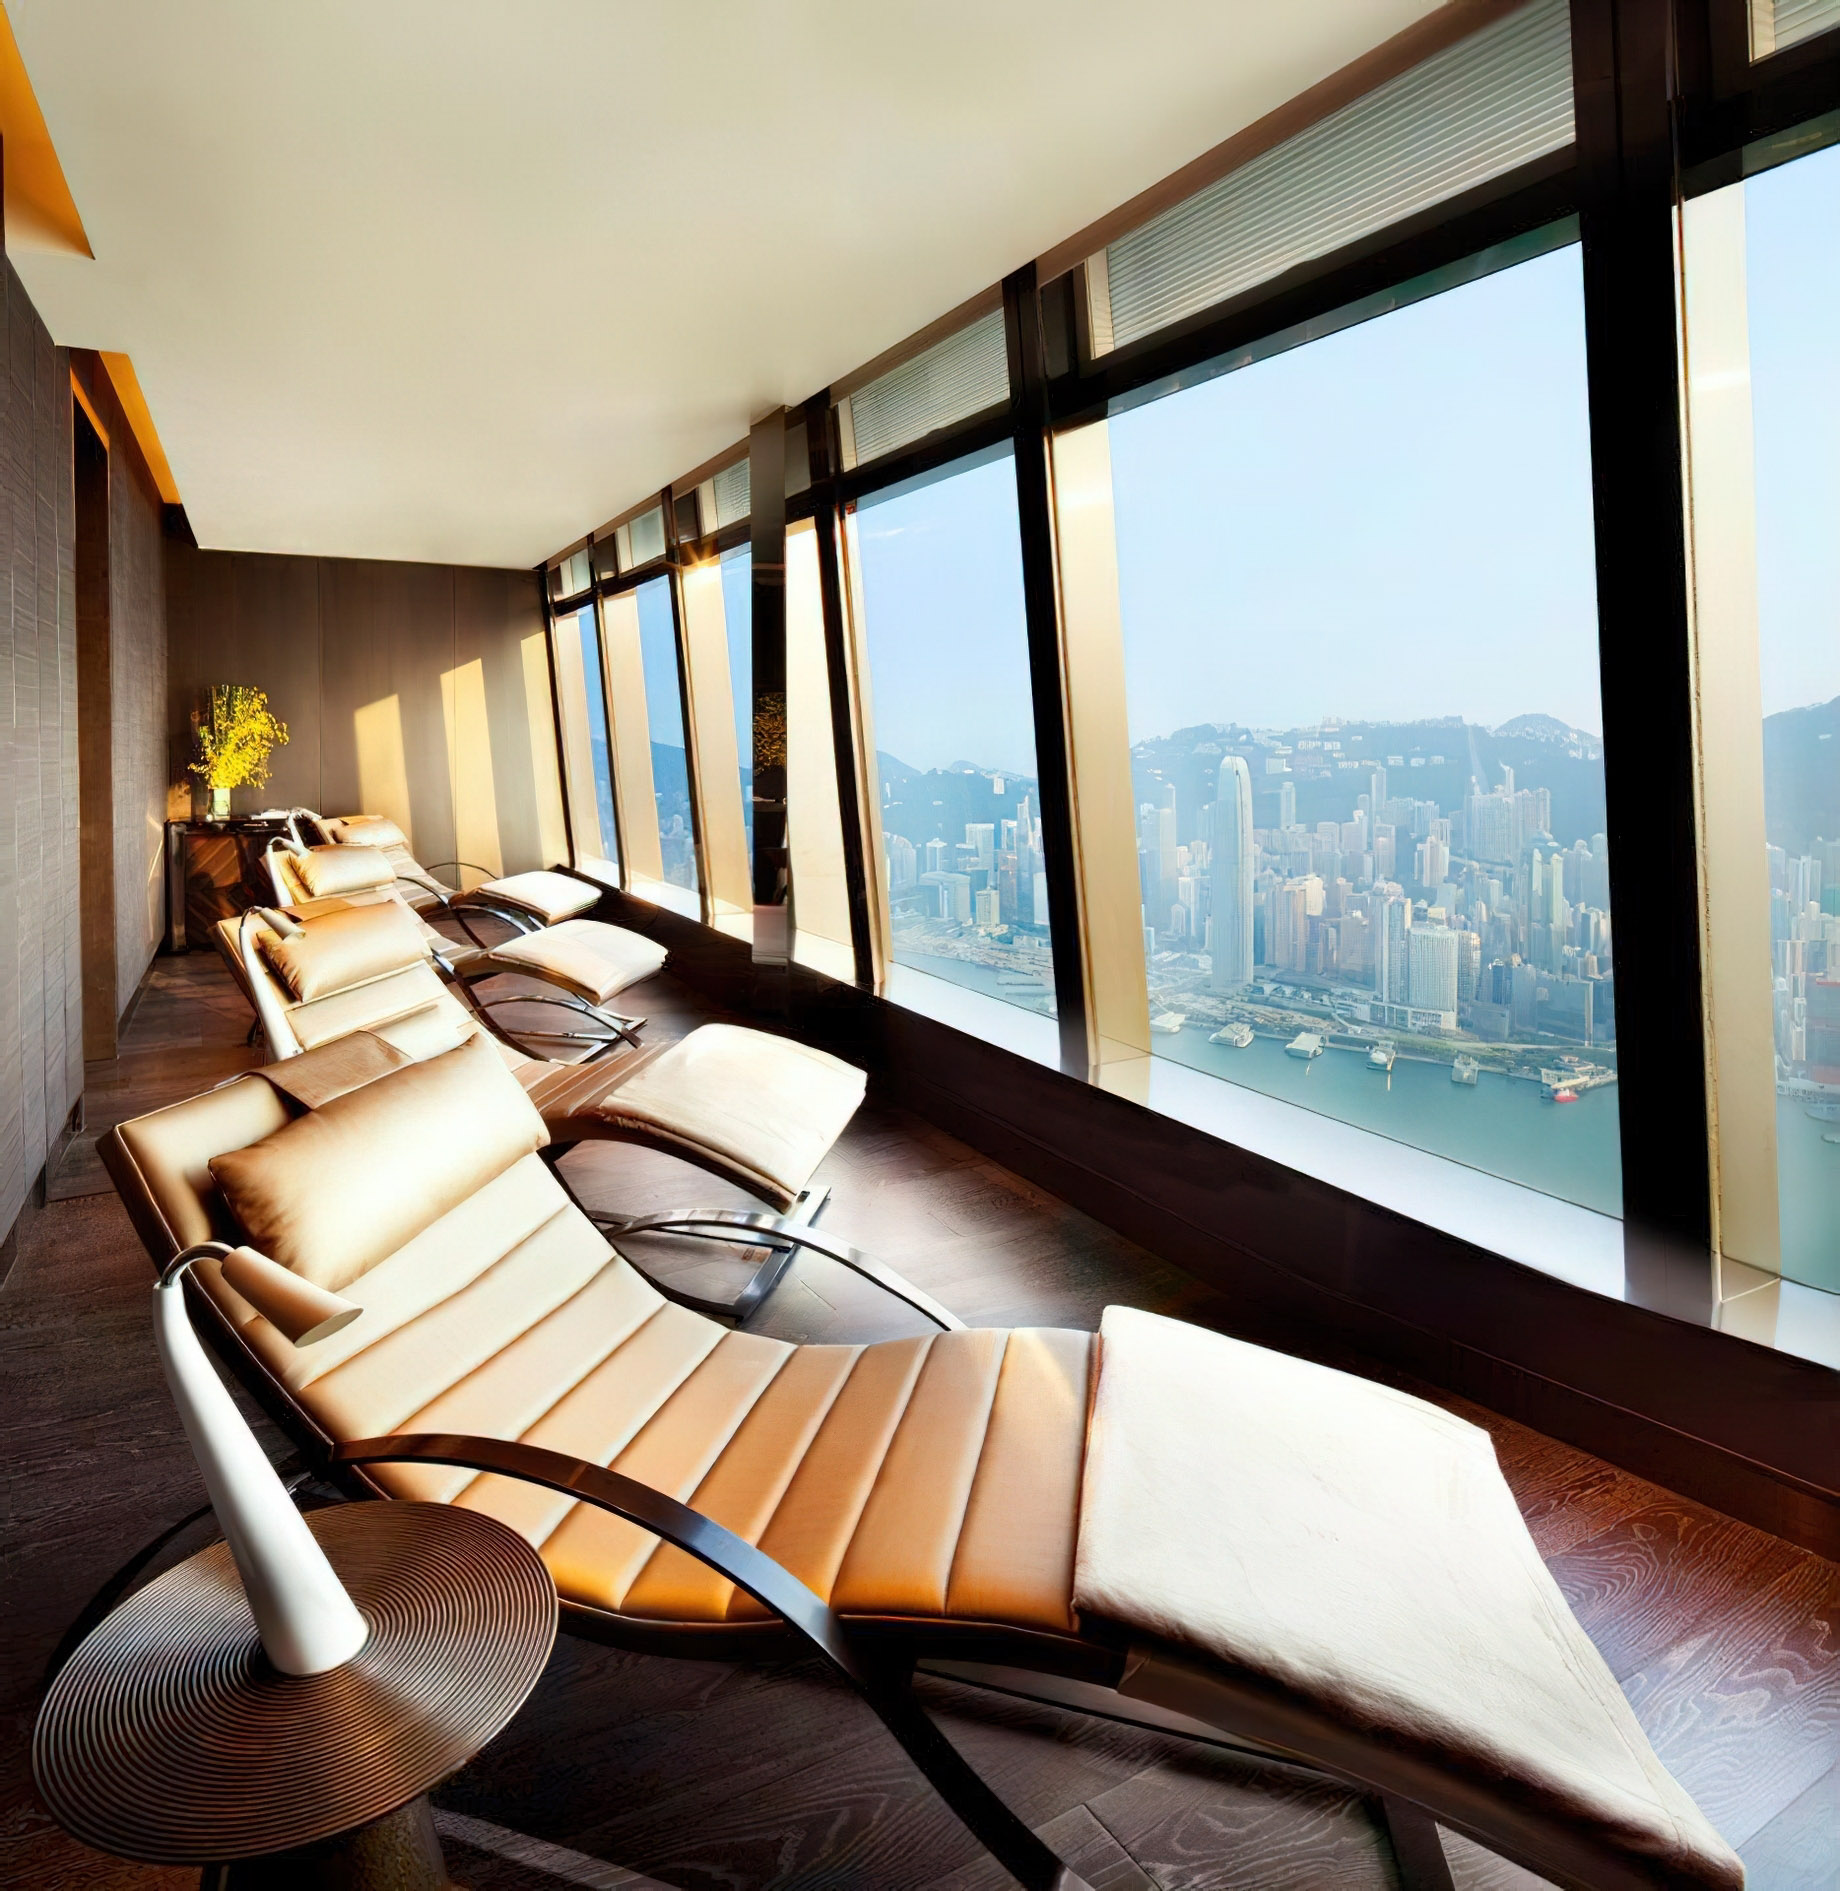 The Ritz-Carlton, Hong Kong Hotel – West Kowloon, Hong Kong – Spa Lounge Chairs